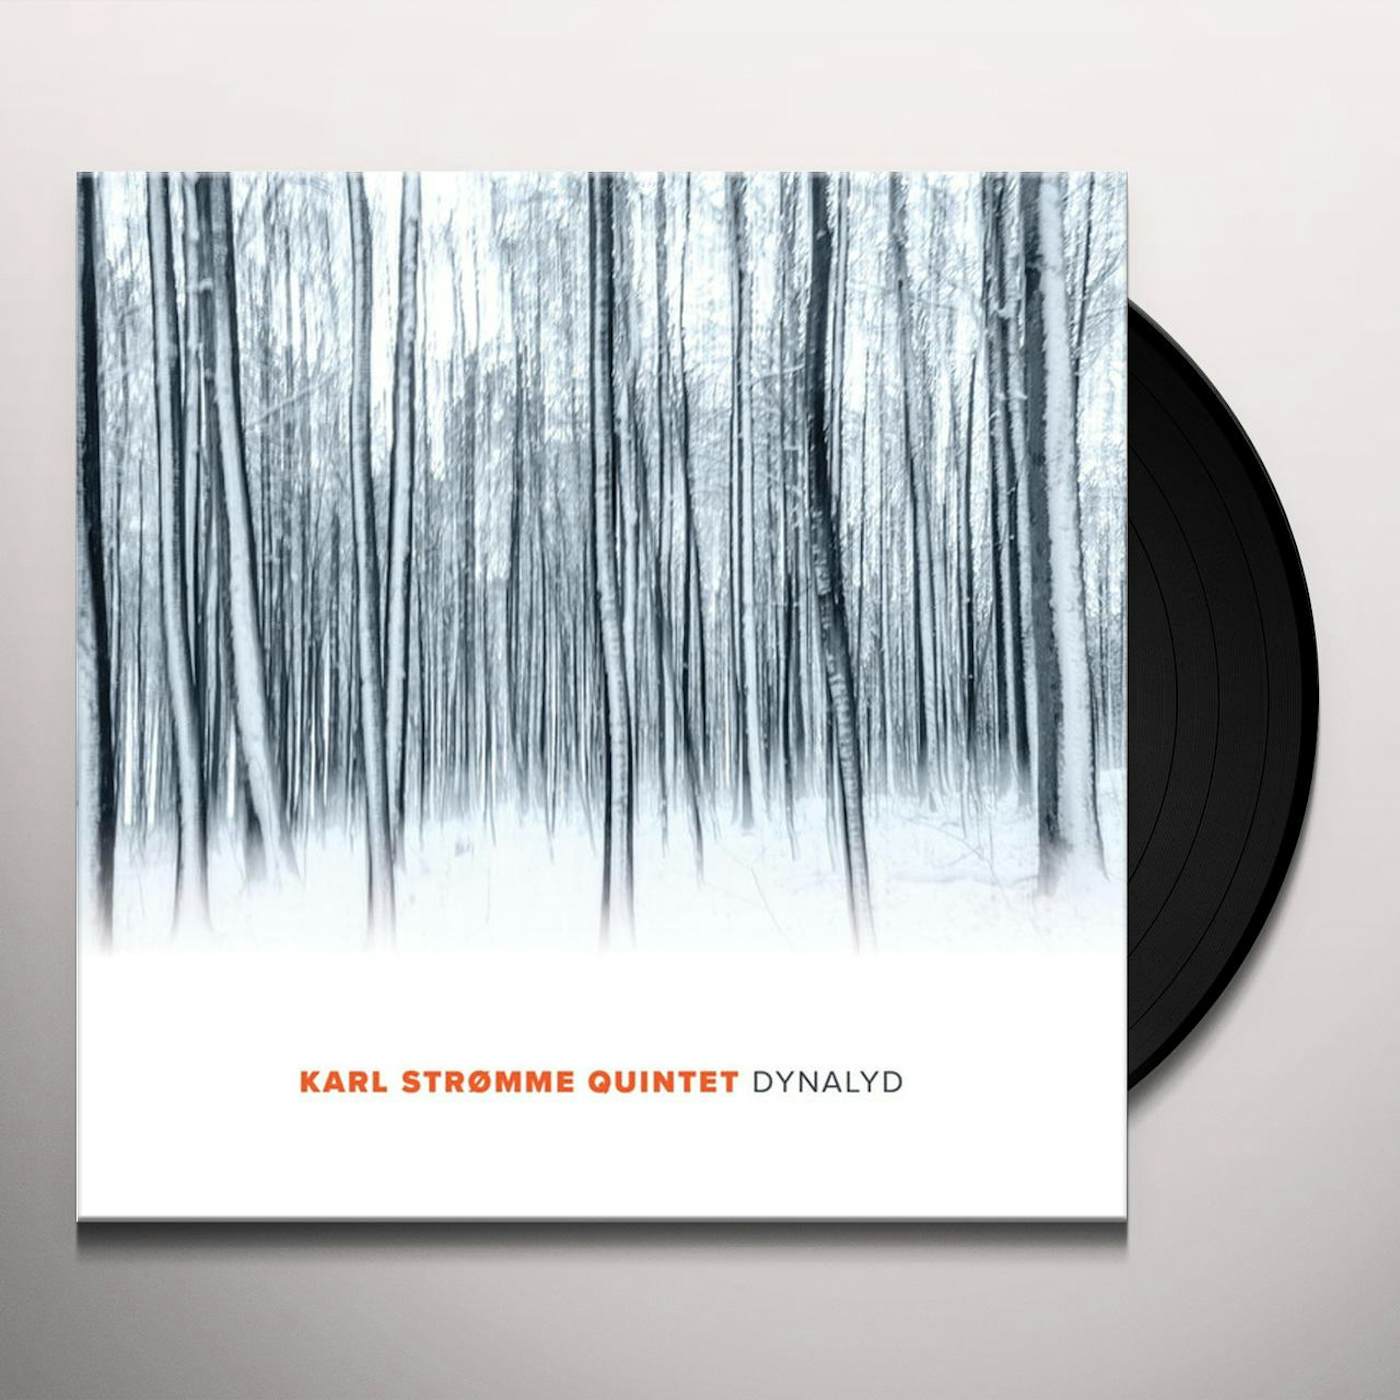 Karl Quintet Stromme Dynalyd Vinyl Record